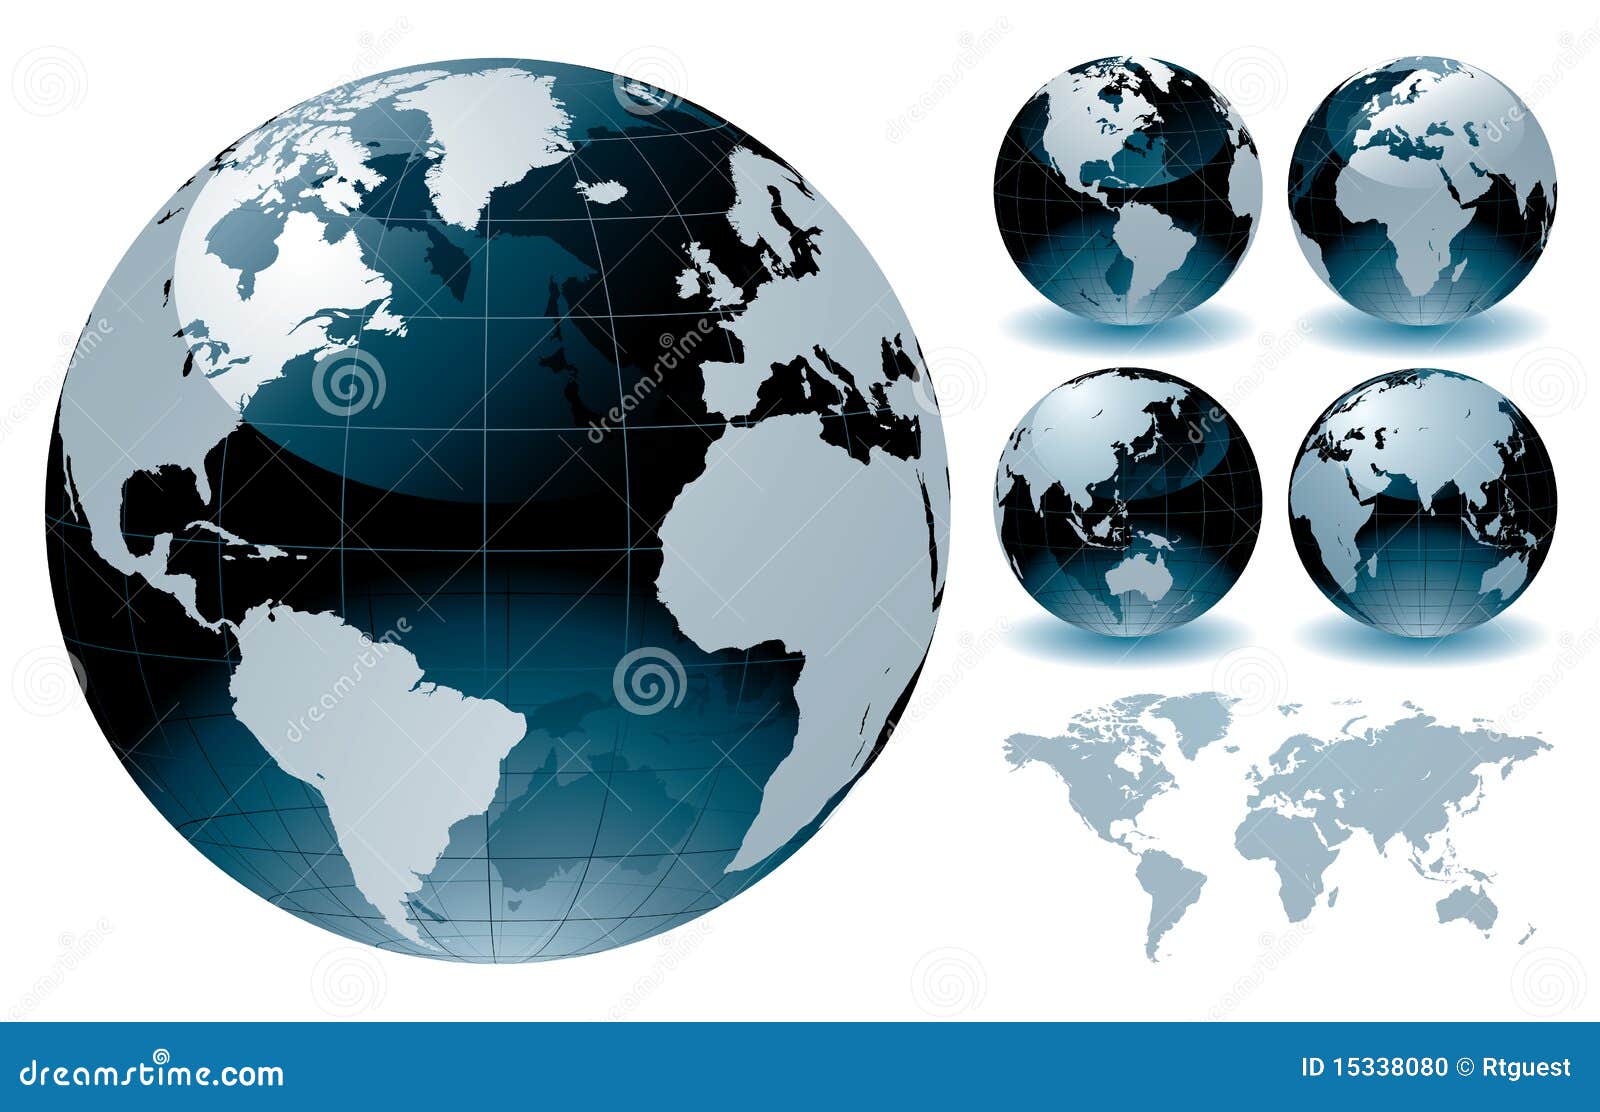 world globe maps